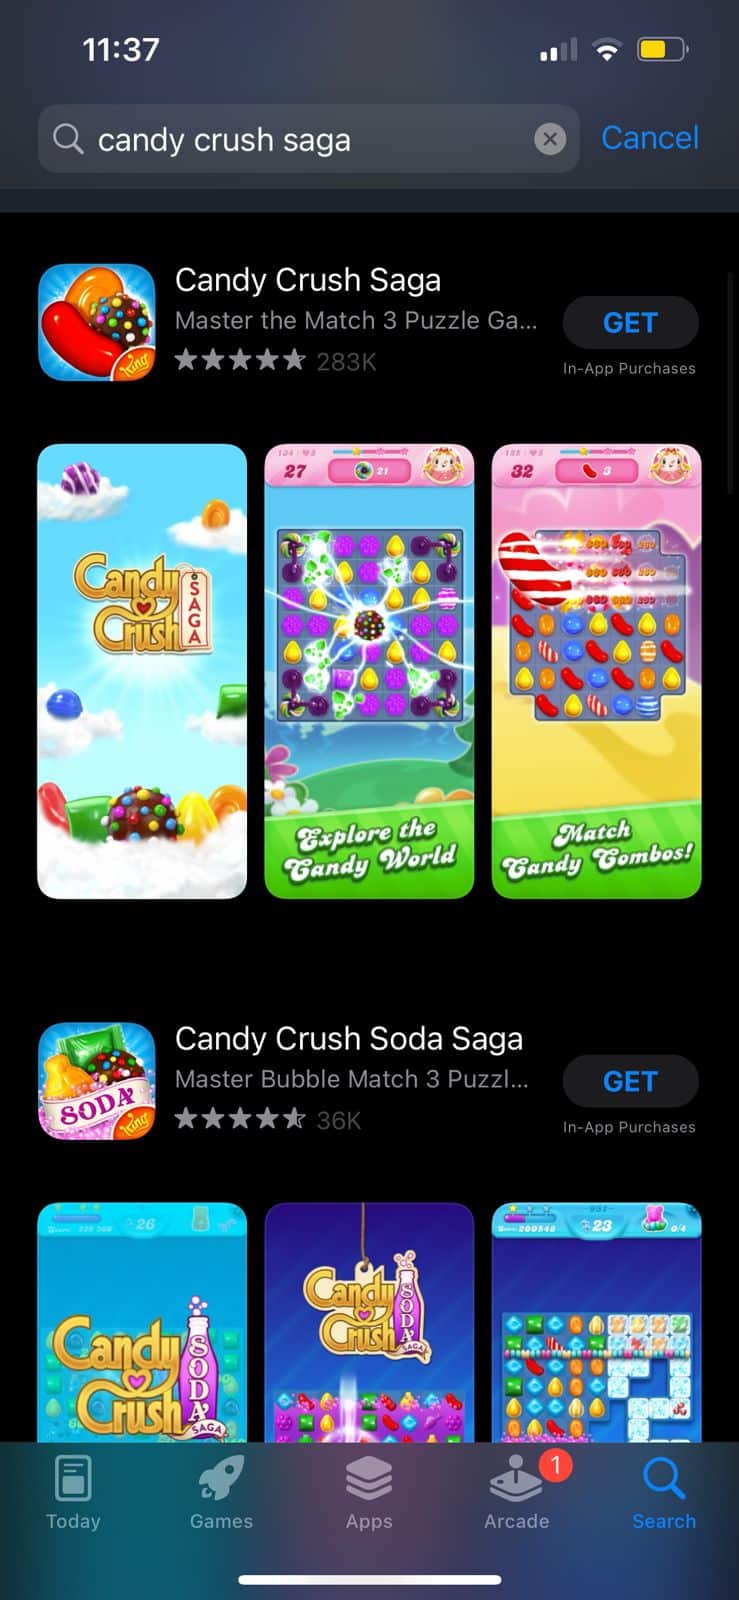 Candy Crush Saga on app store